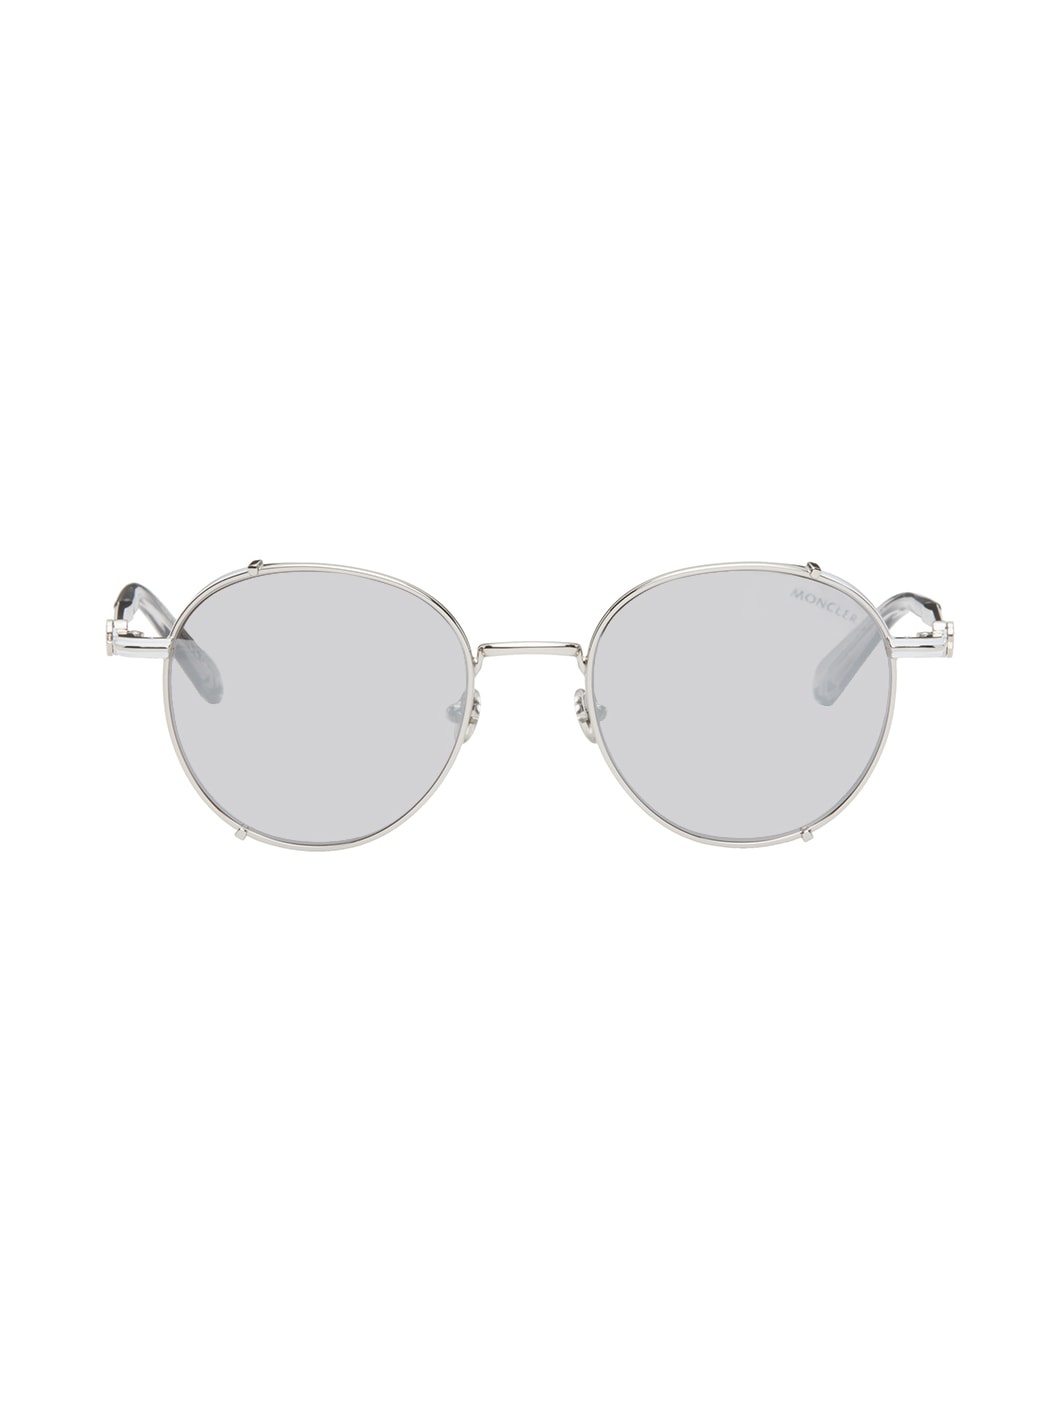 Silver & White Owlet Sunglasses - 1